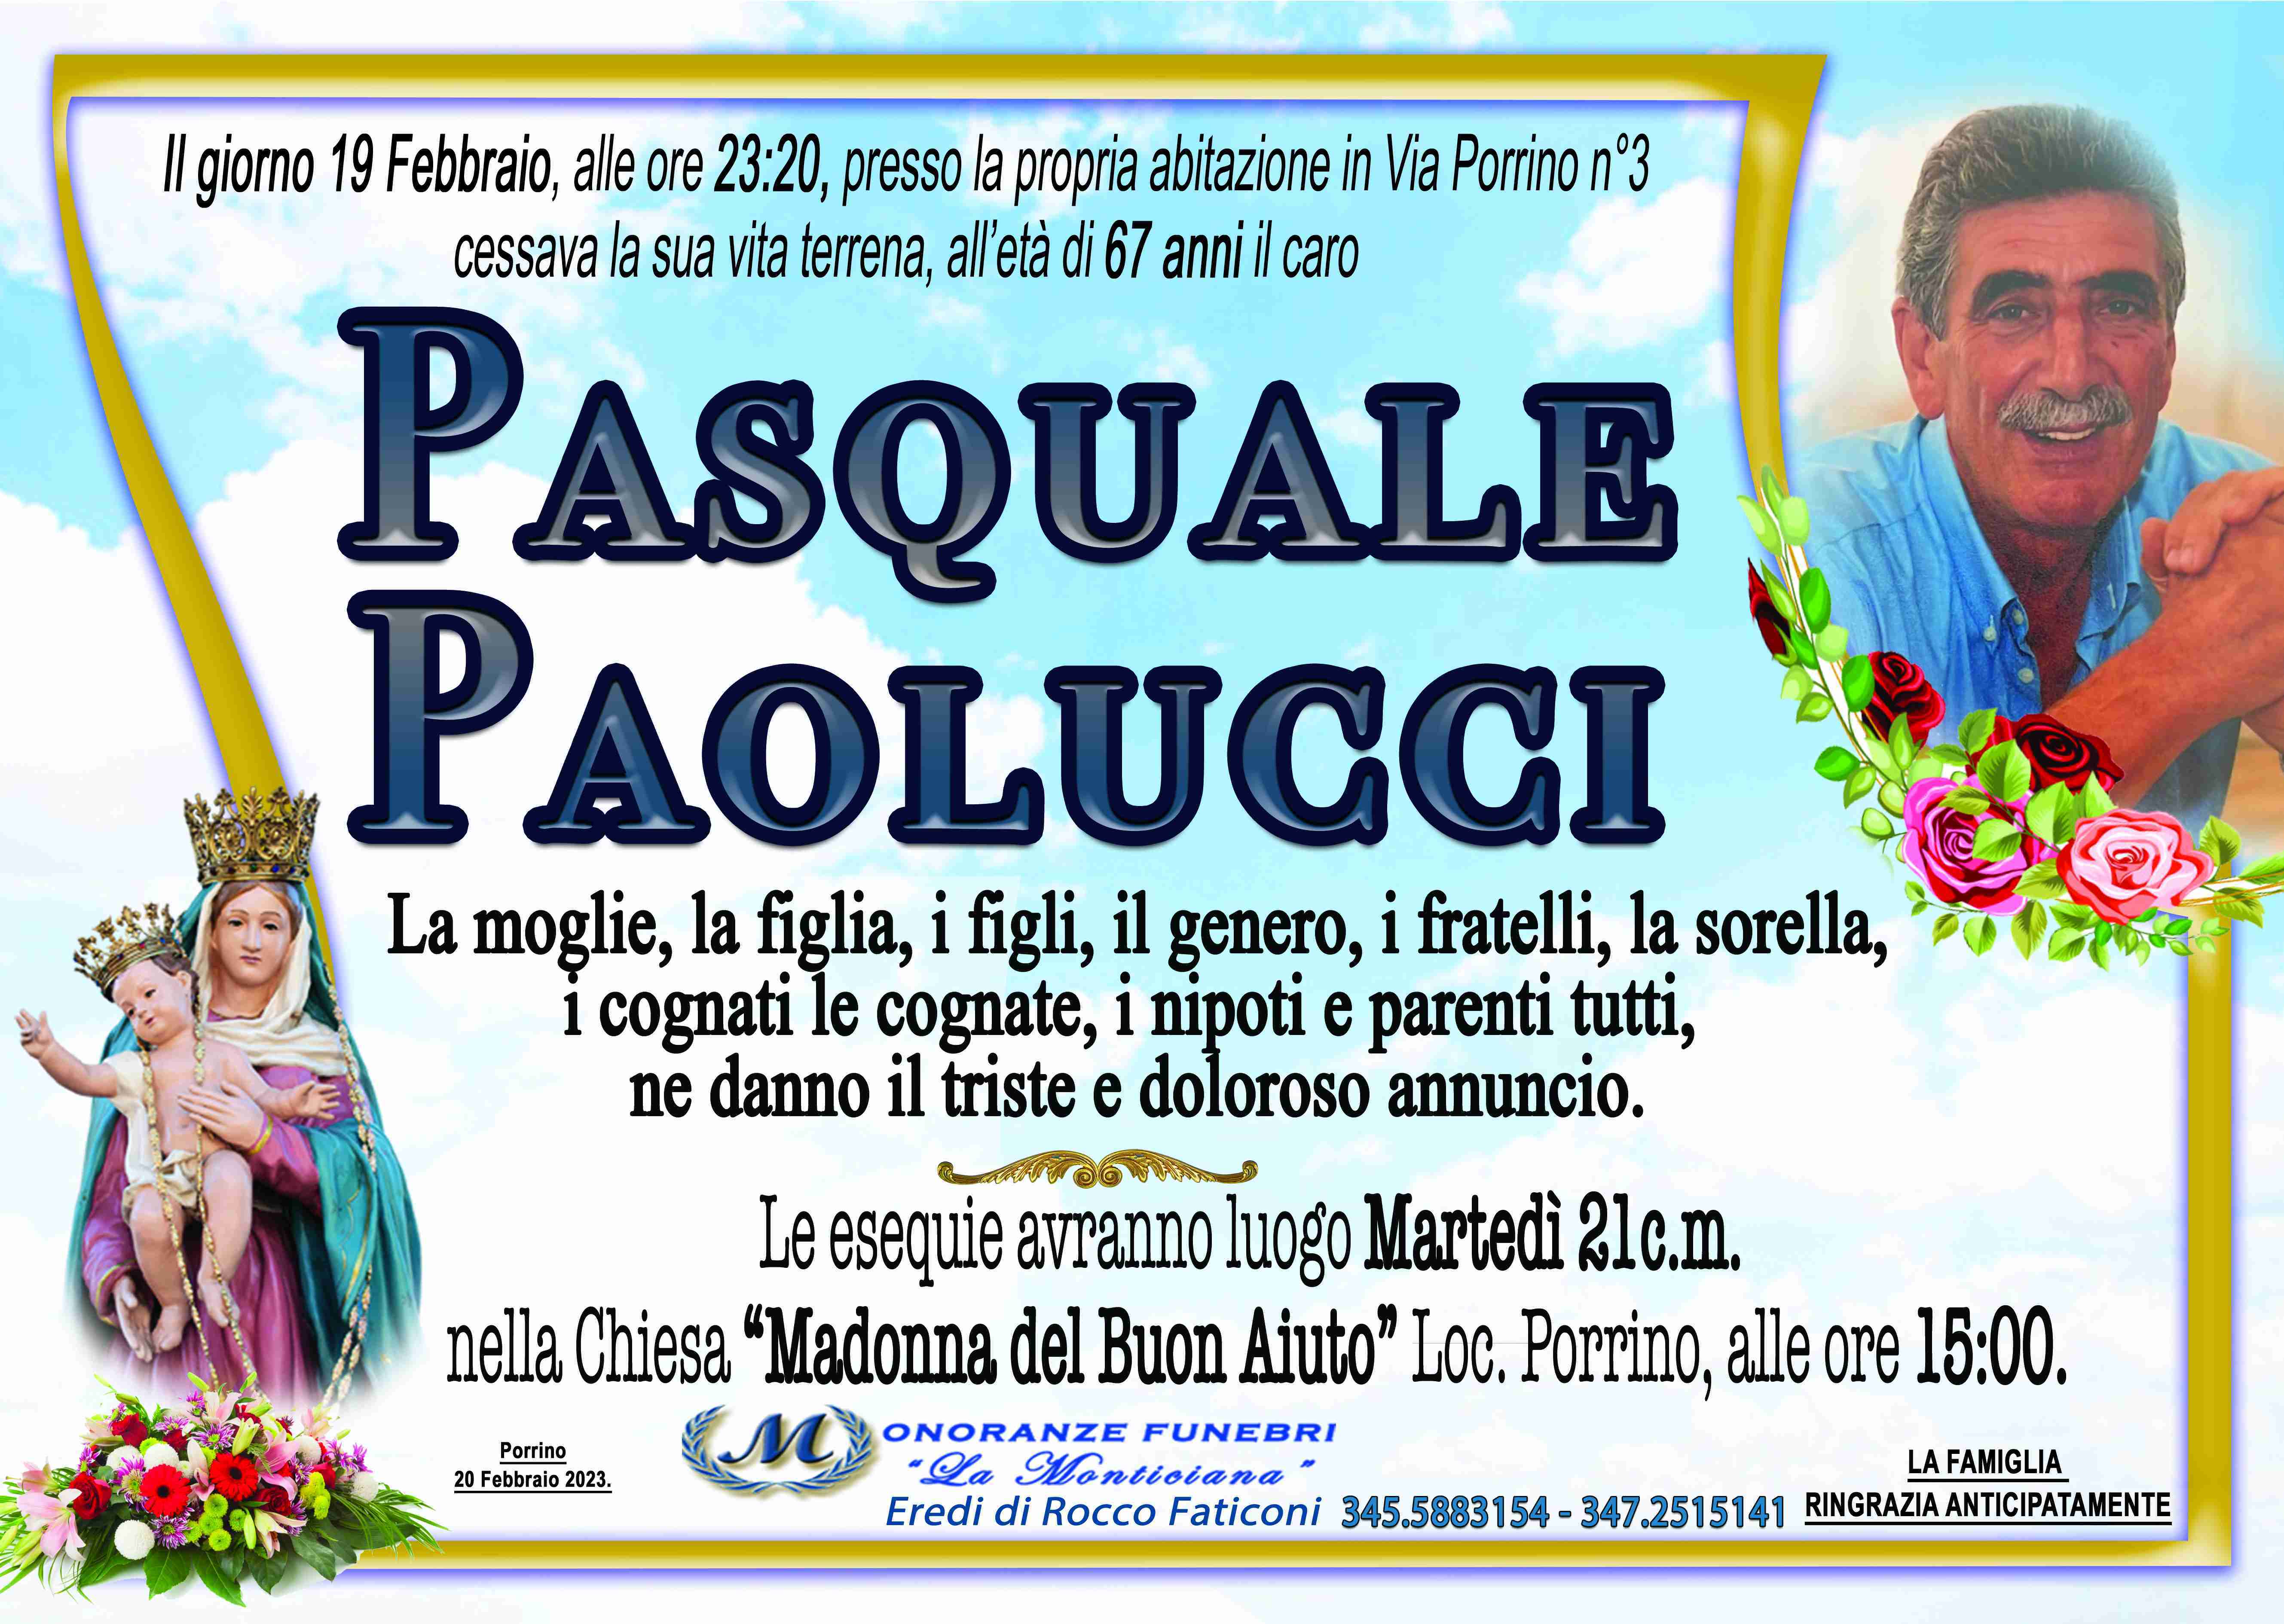 Pasquale Paolucci